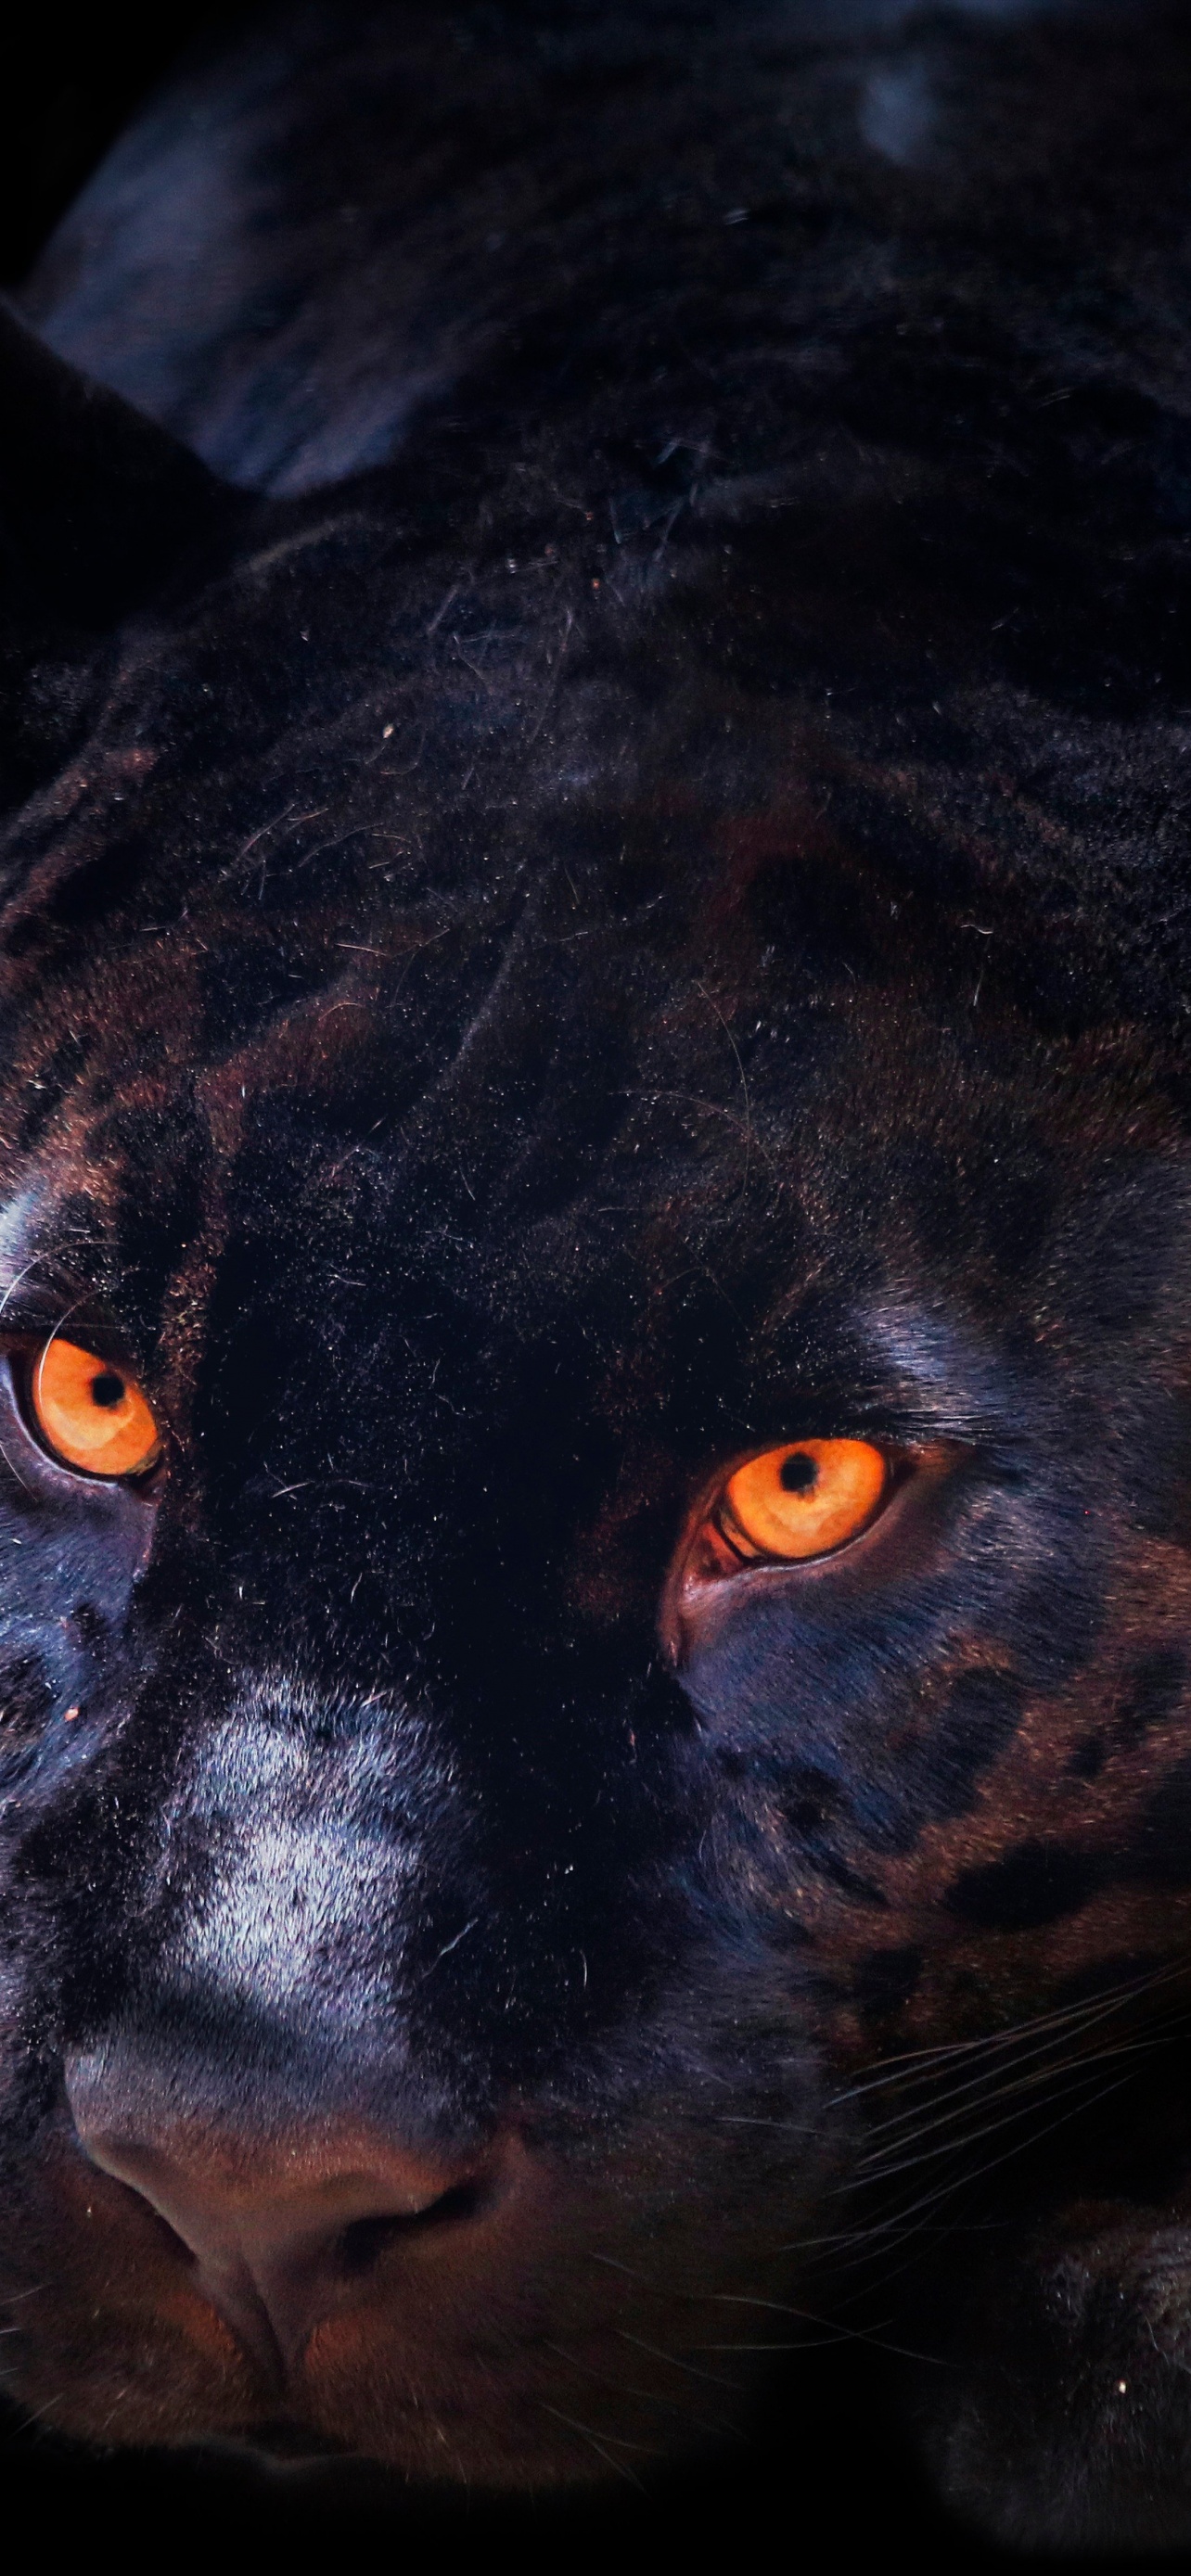 3860x4290 Best Of Black Panther Animal Wallpaper iPhone Design - Anime ...  | Black panther cat, Jaguar animal, Black jaguar animal